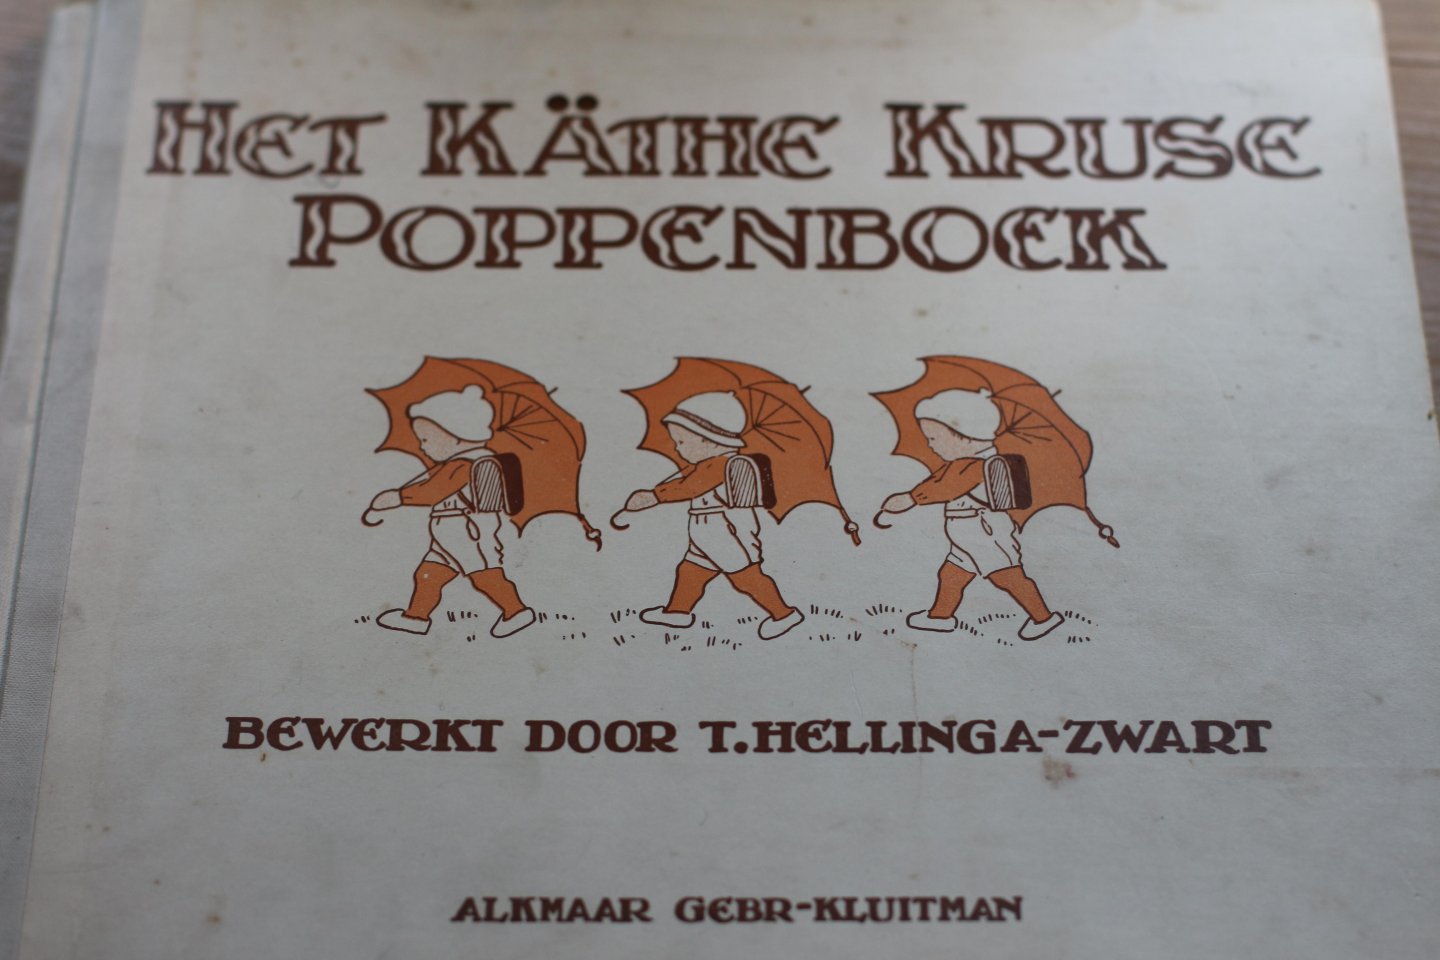 HELLINGA-ZWART, T. - Het Käthe Kruse Poppenboek